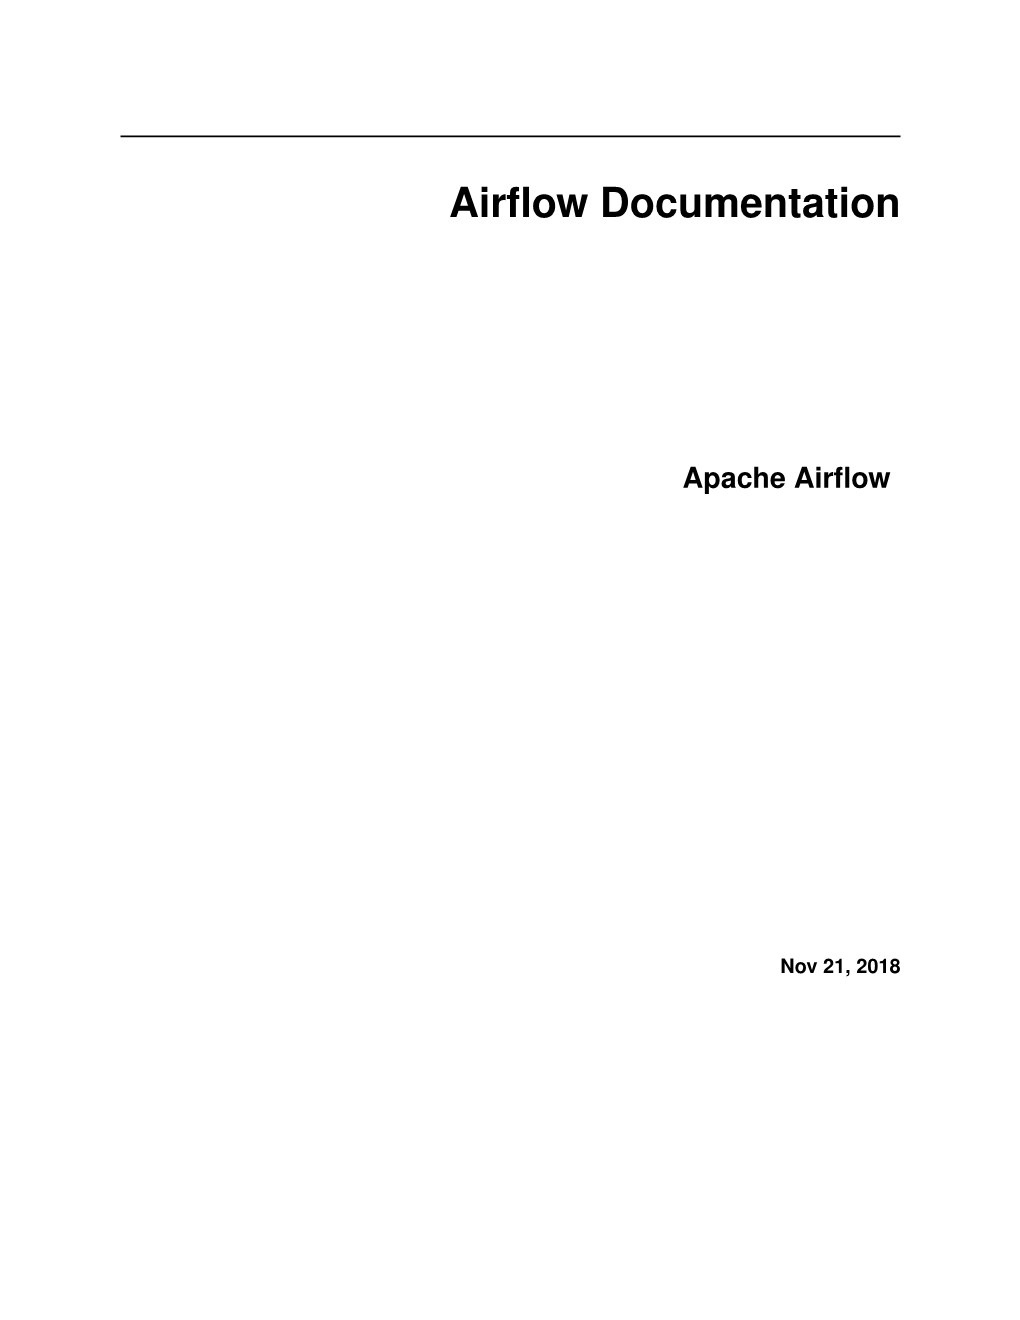 Airflow Documentation Apache Airflow